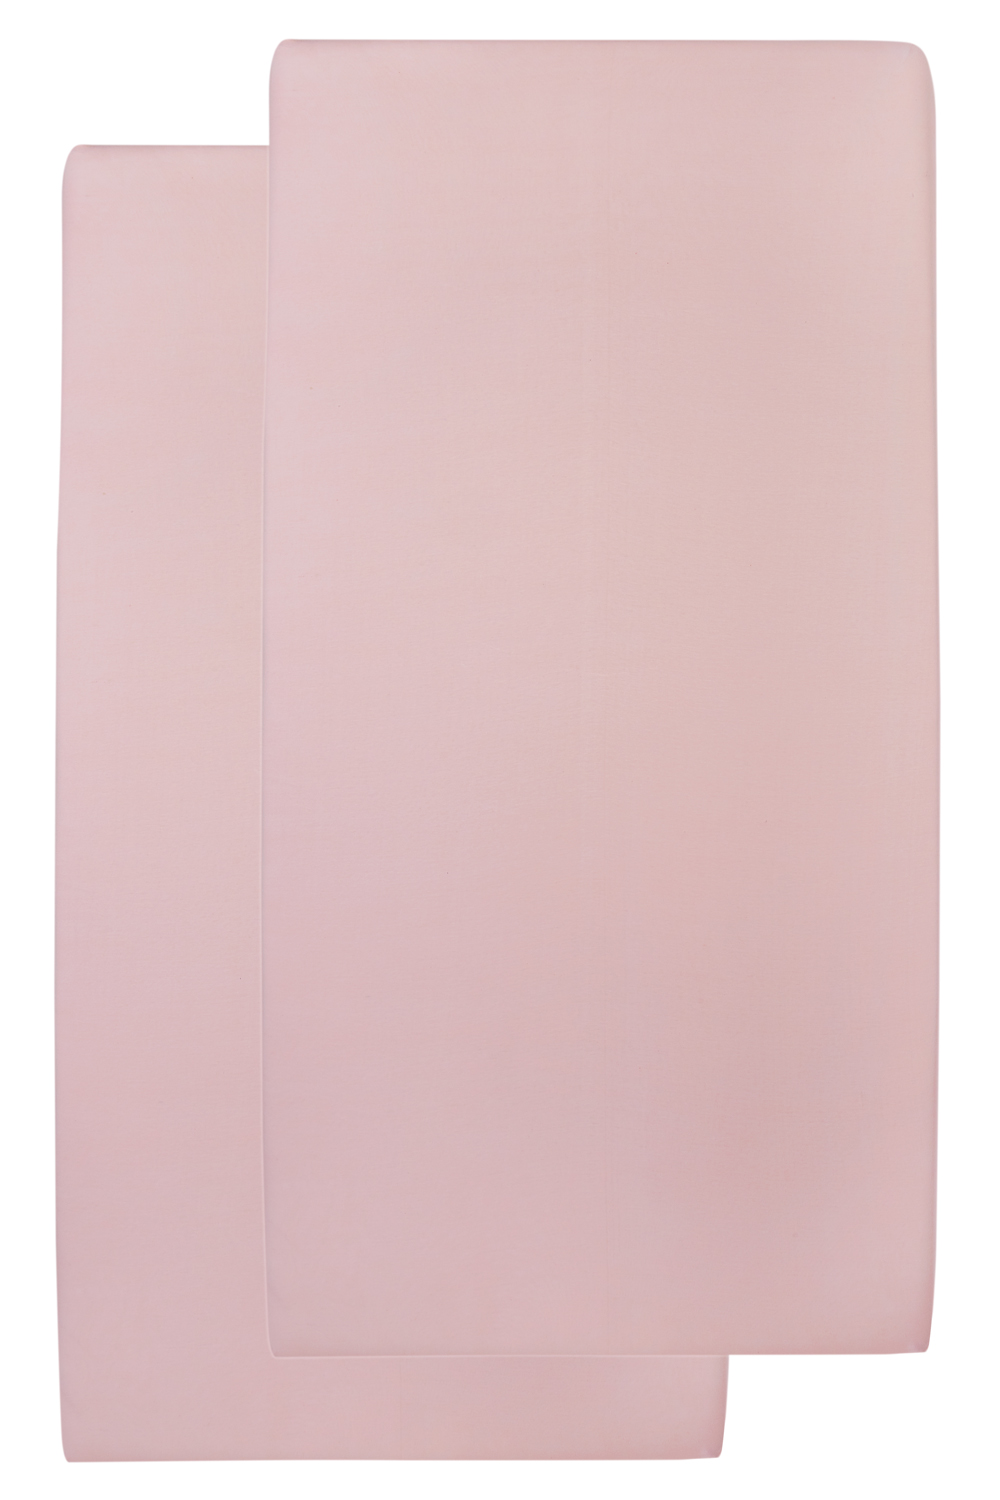 Hoeslaken juniorbed 2-pack Uni - old pink - 70x140/150cm